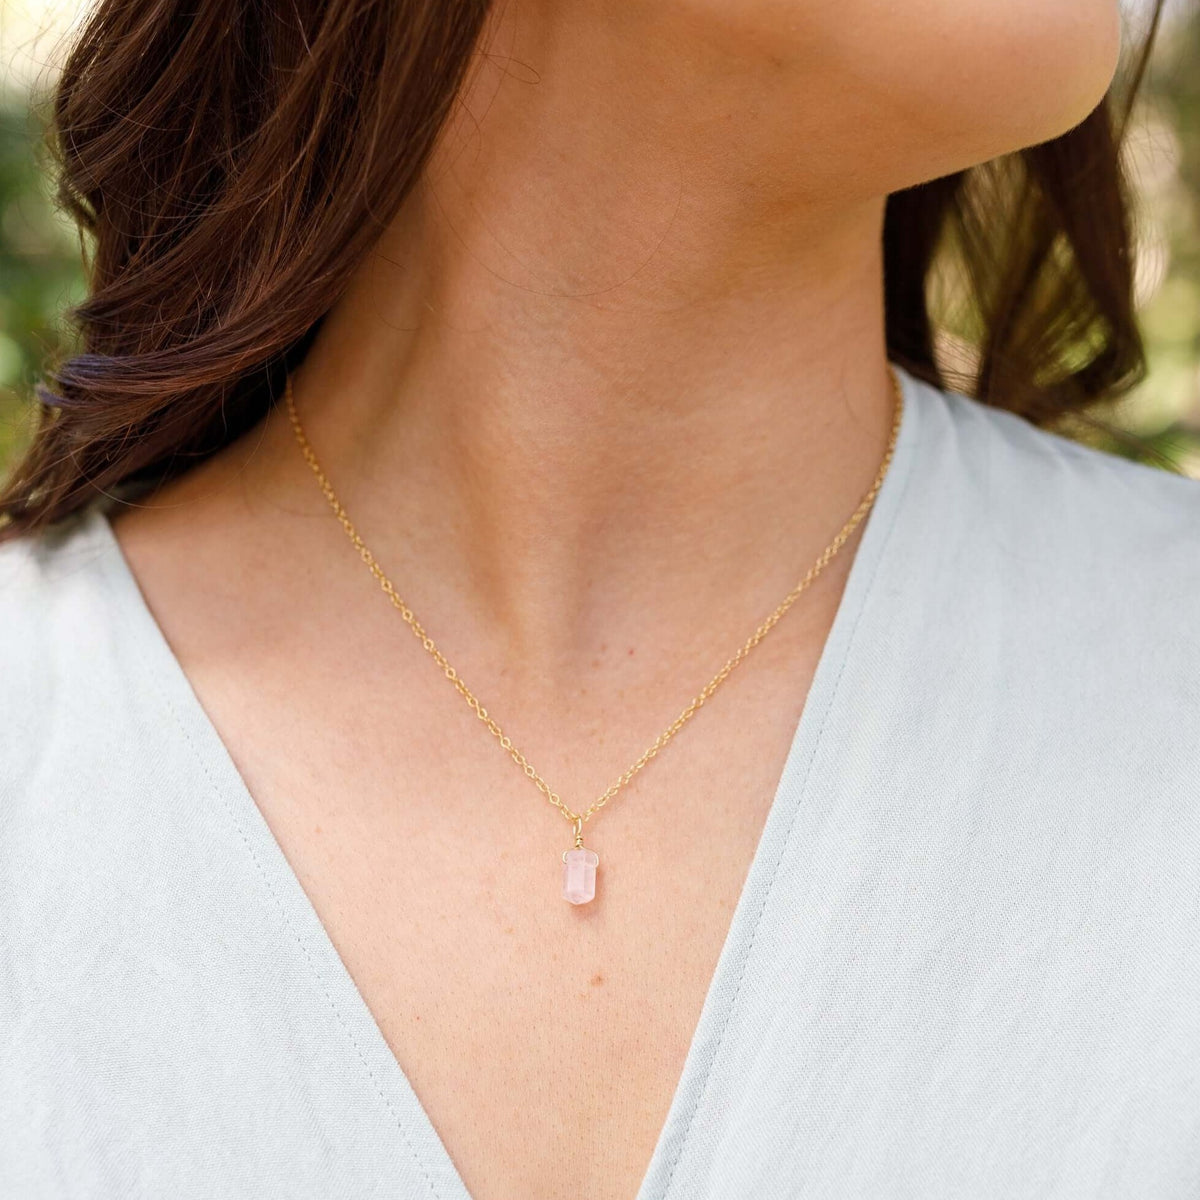 Double Terminated Crystal Pendant Necklace - Rose Quartz - 14K Gold Fill - Luna Tide Handmade Jewellery